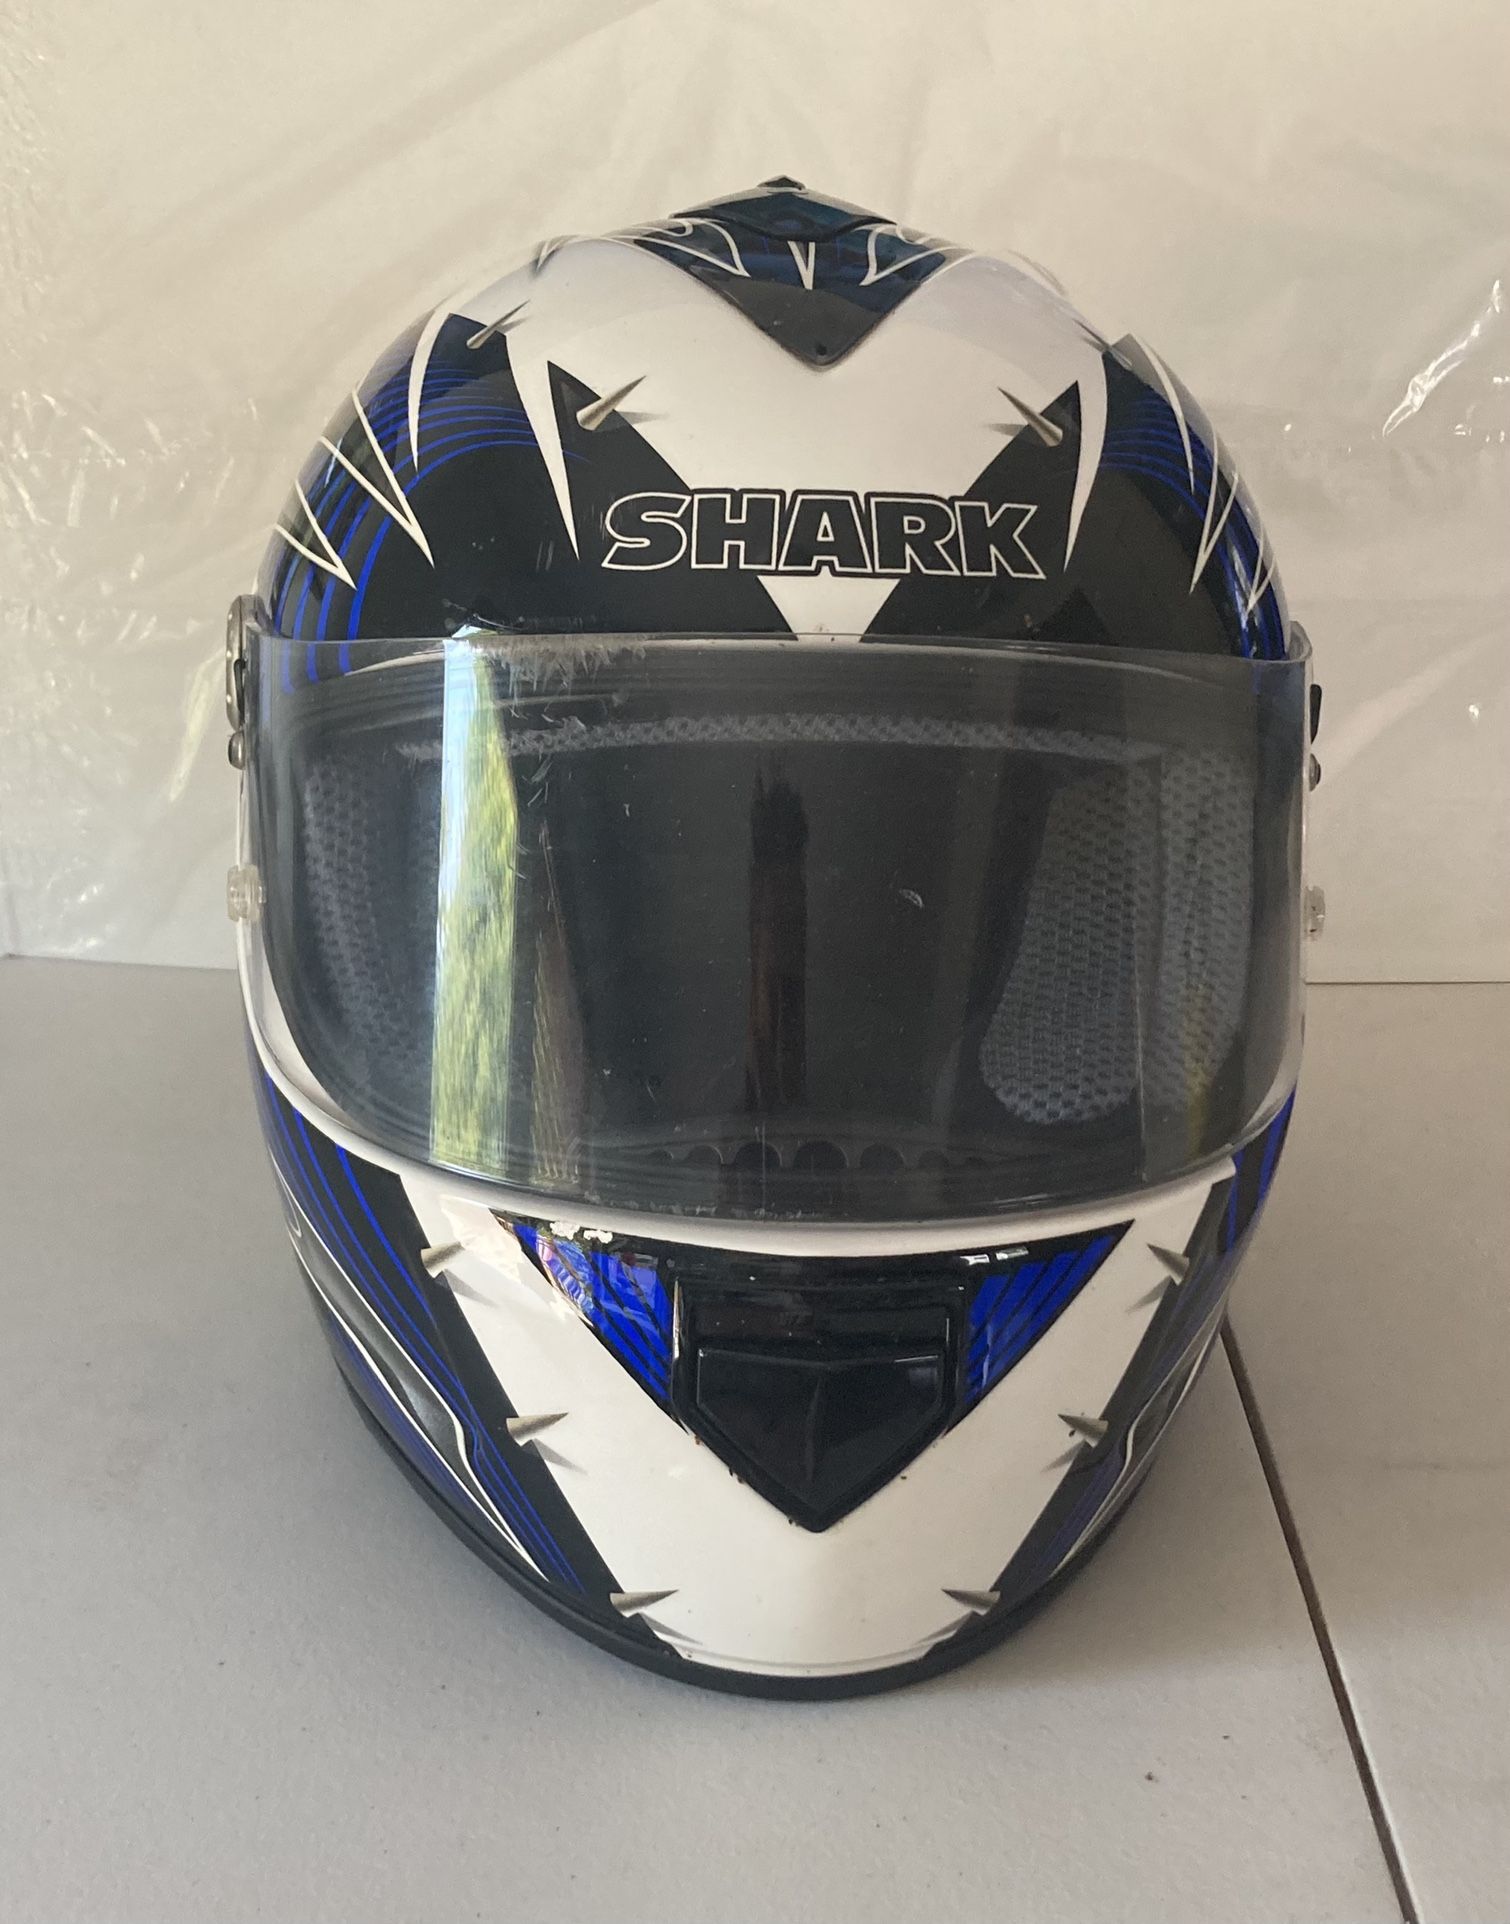 SHARK & HJC helmets - Both Size L